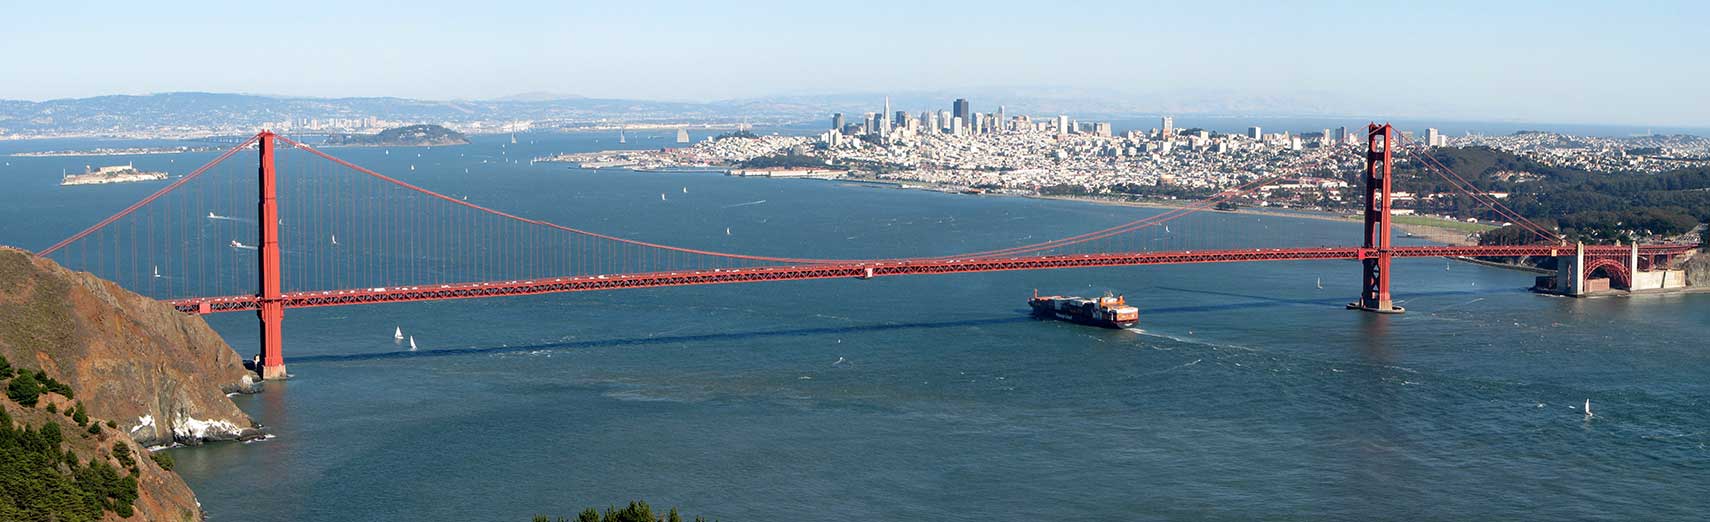 Golden Gate Bridge with San Francisco, California, United States